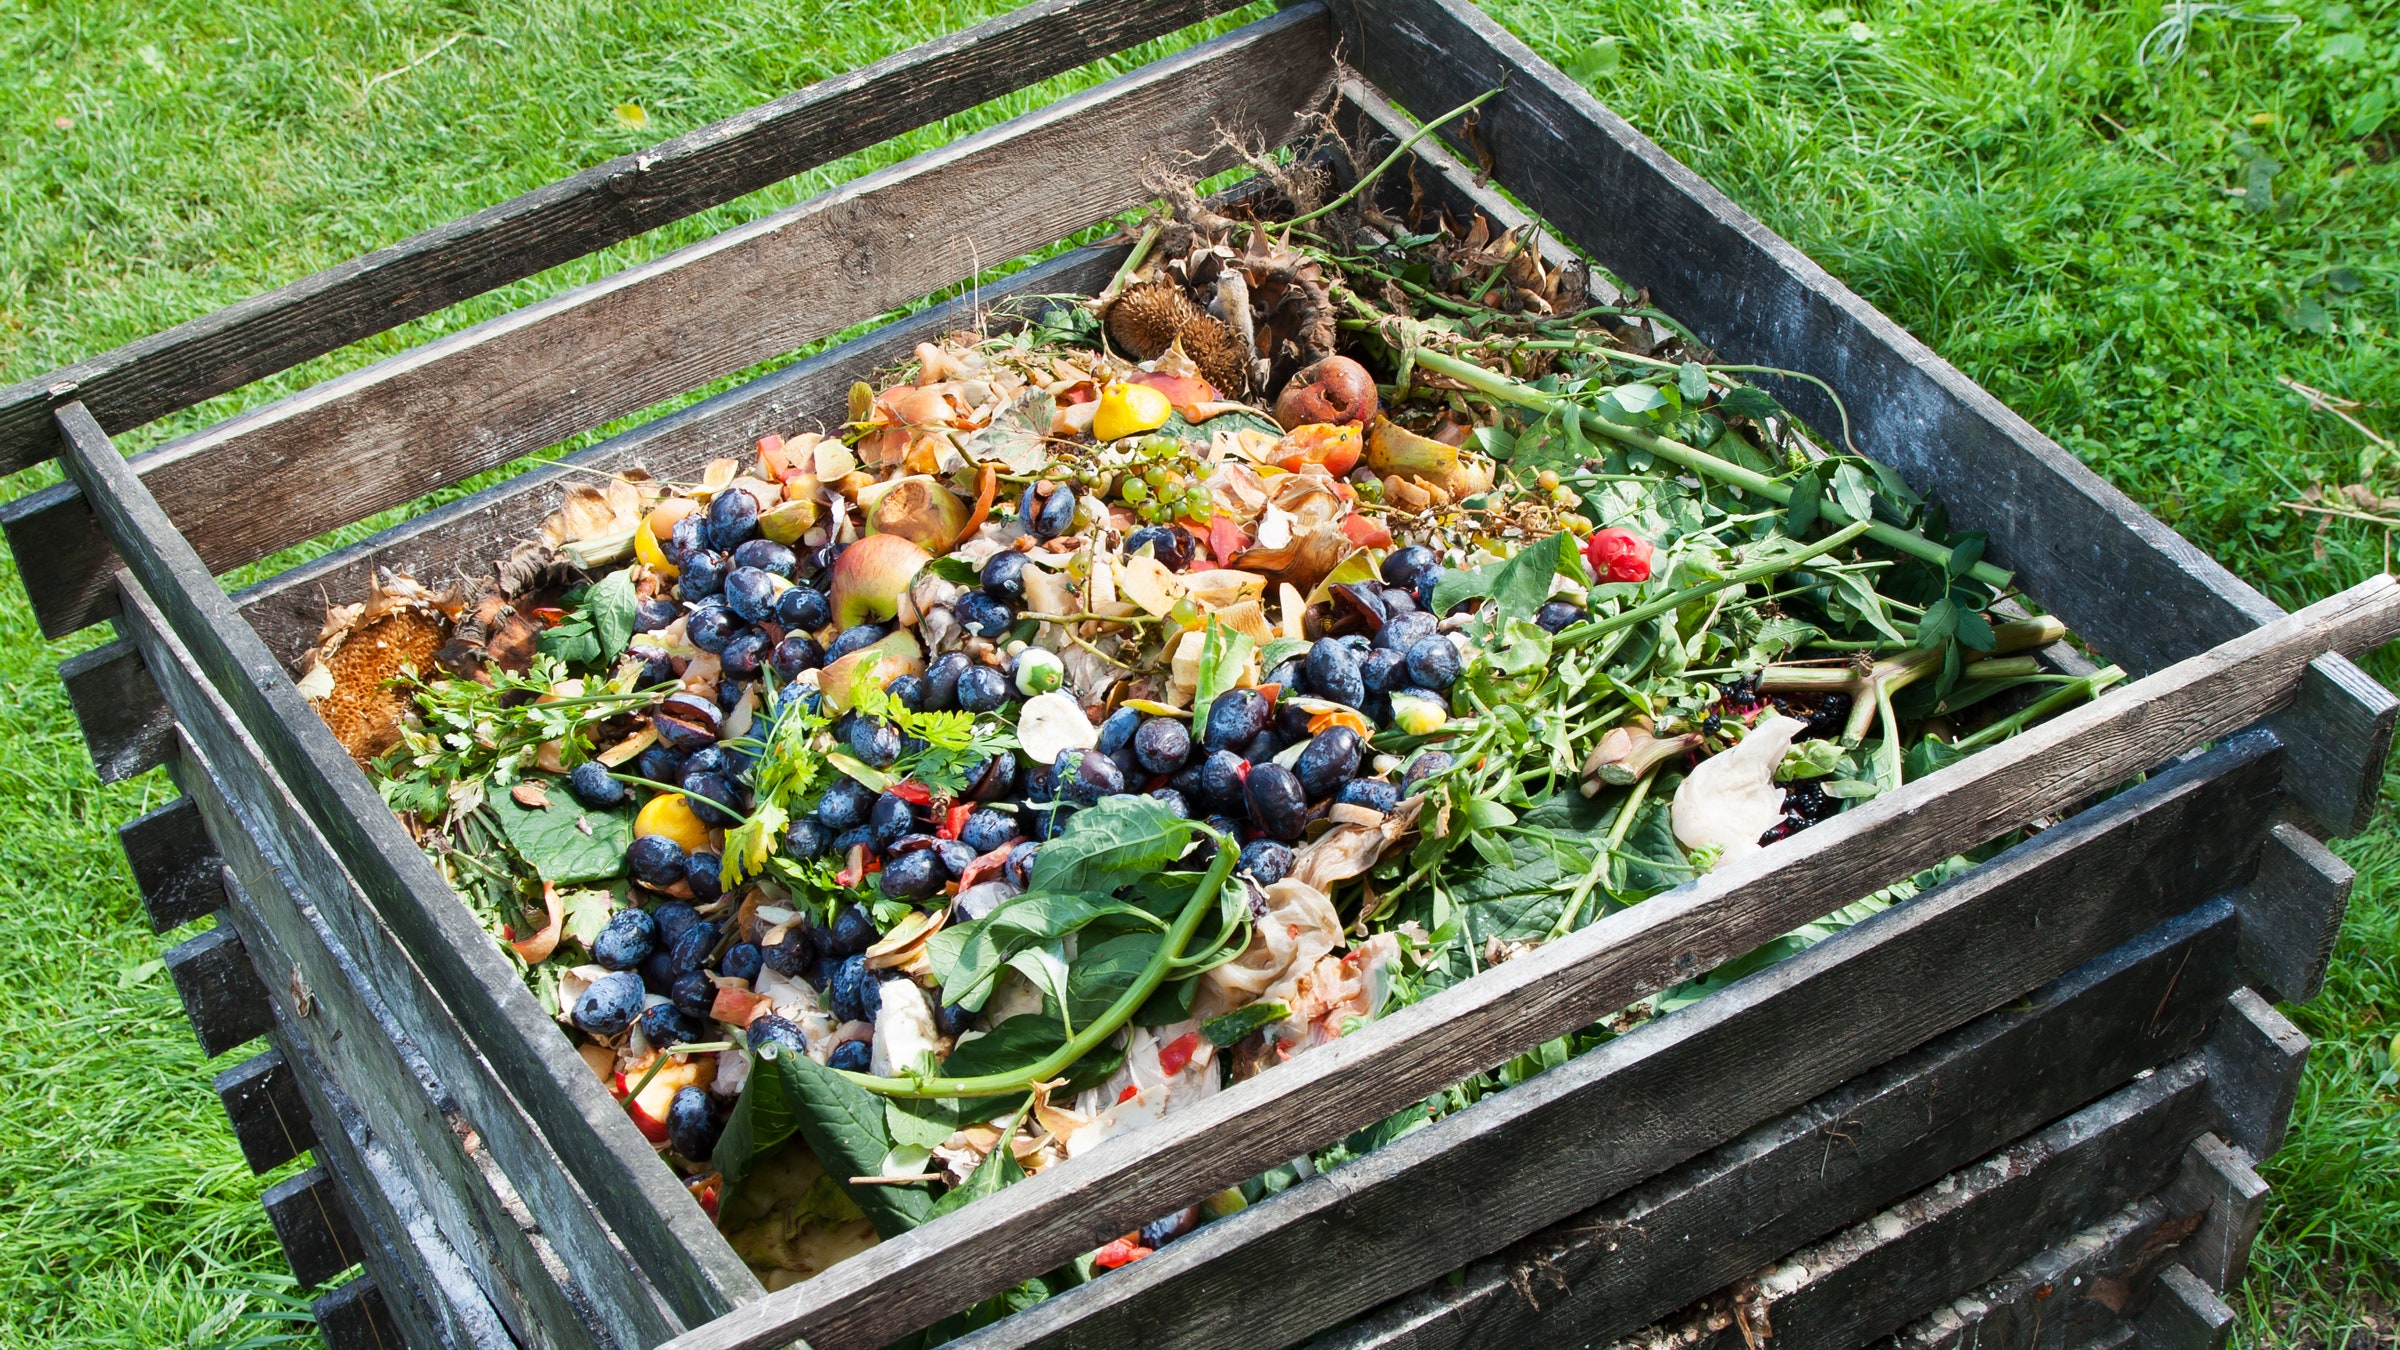 An easy backyard compost pile